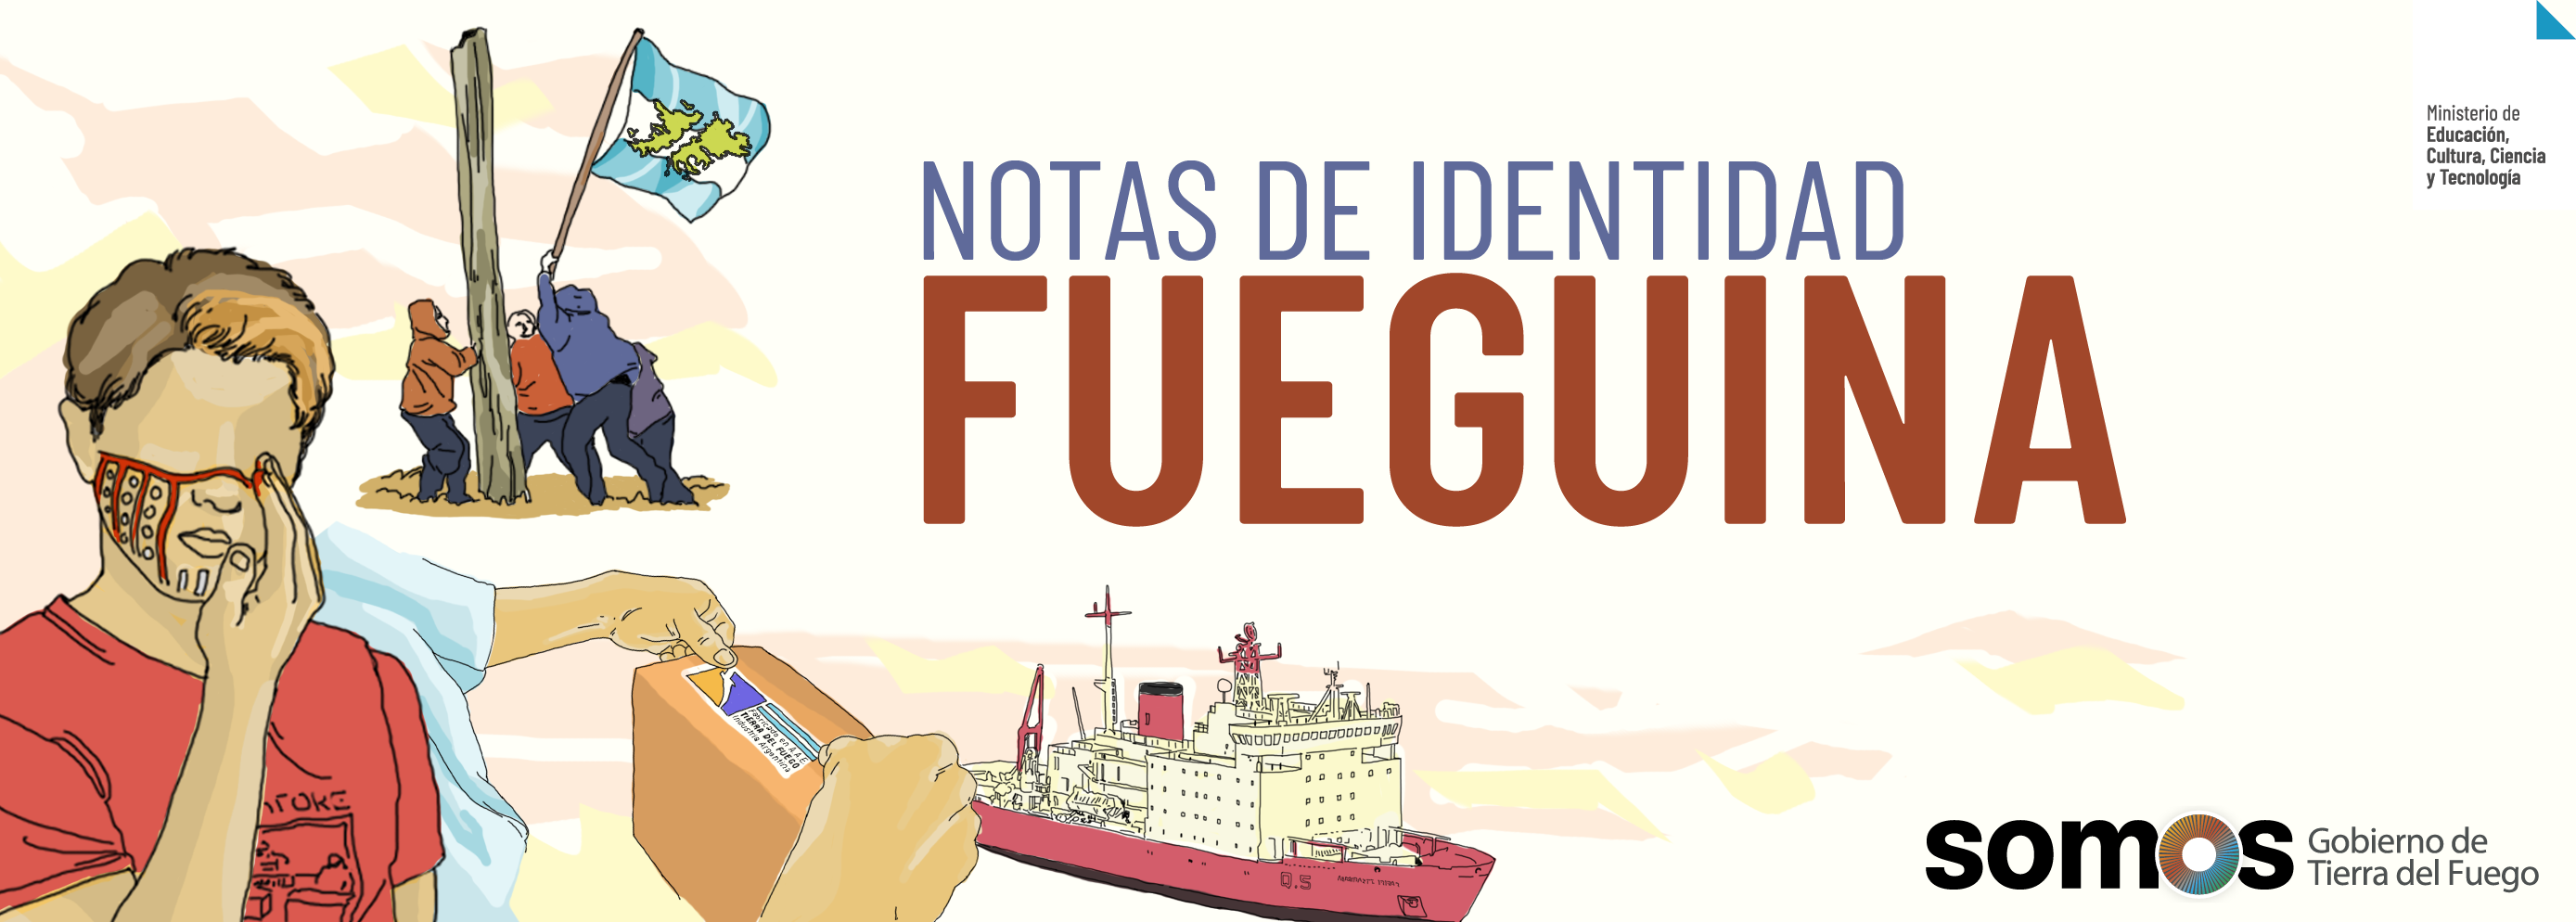 FUEGUINA_1333x477-01 general notas